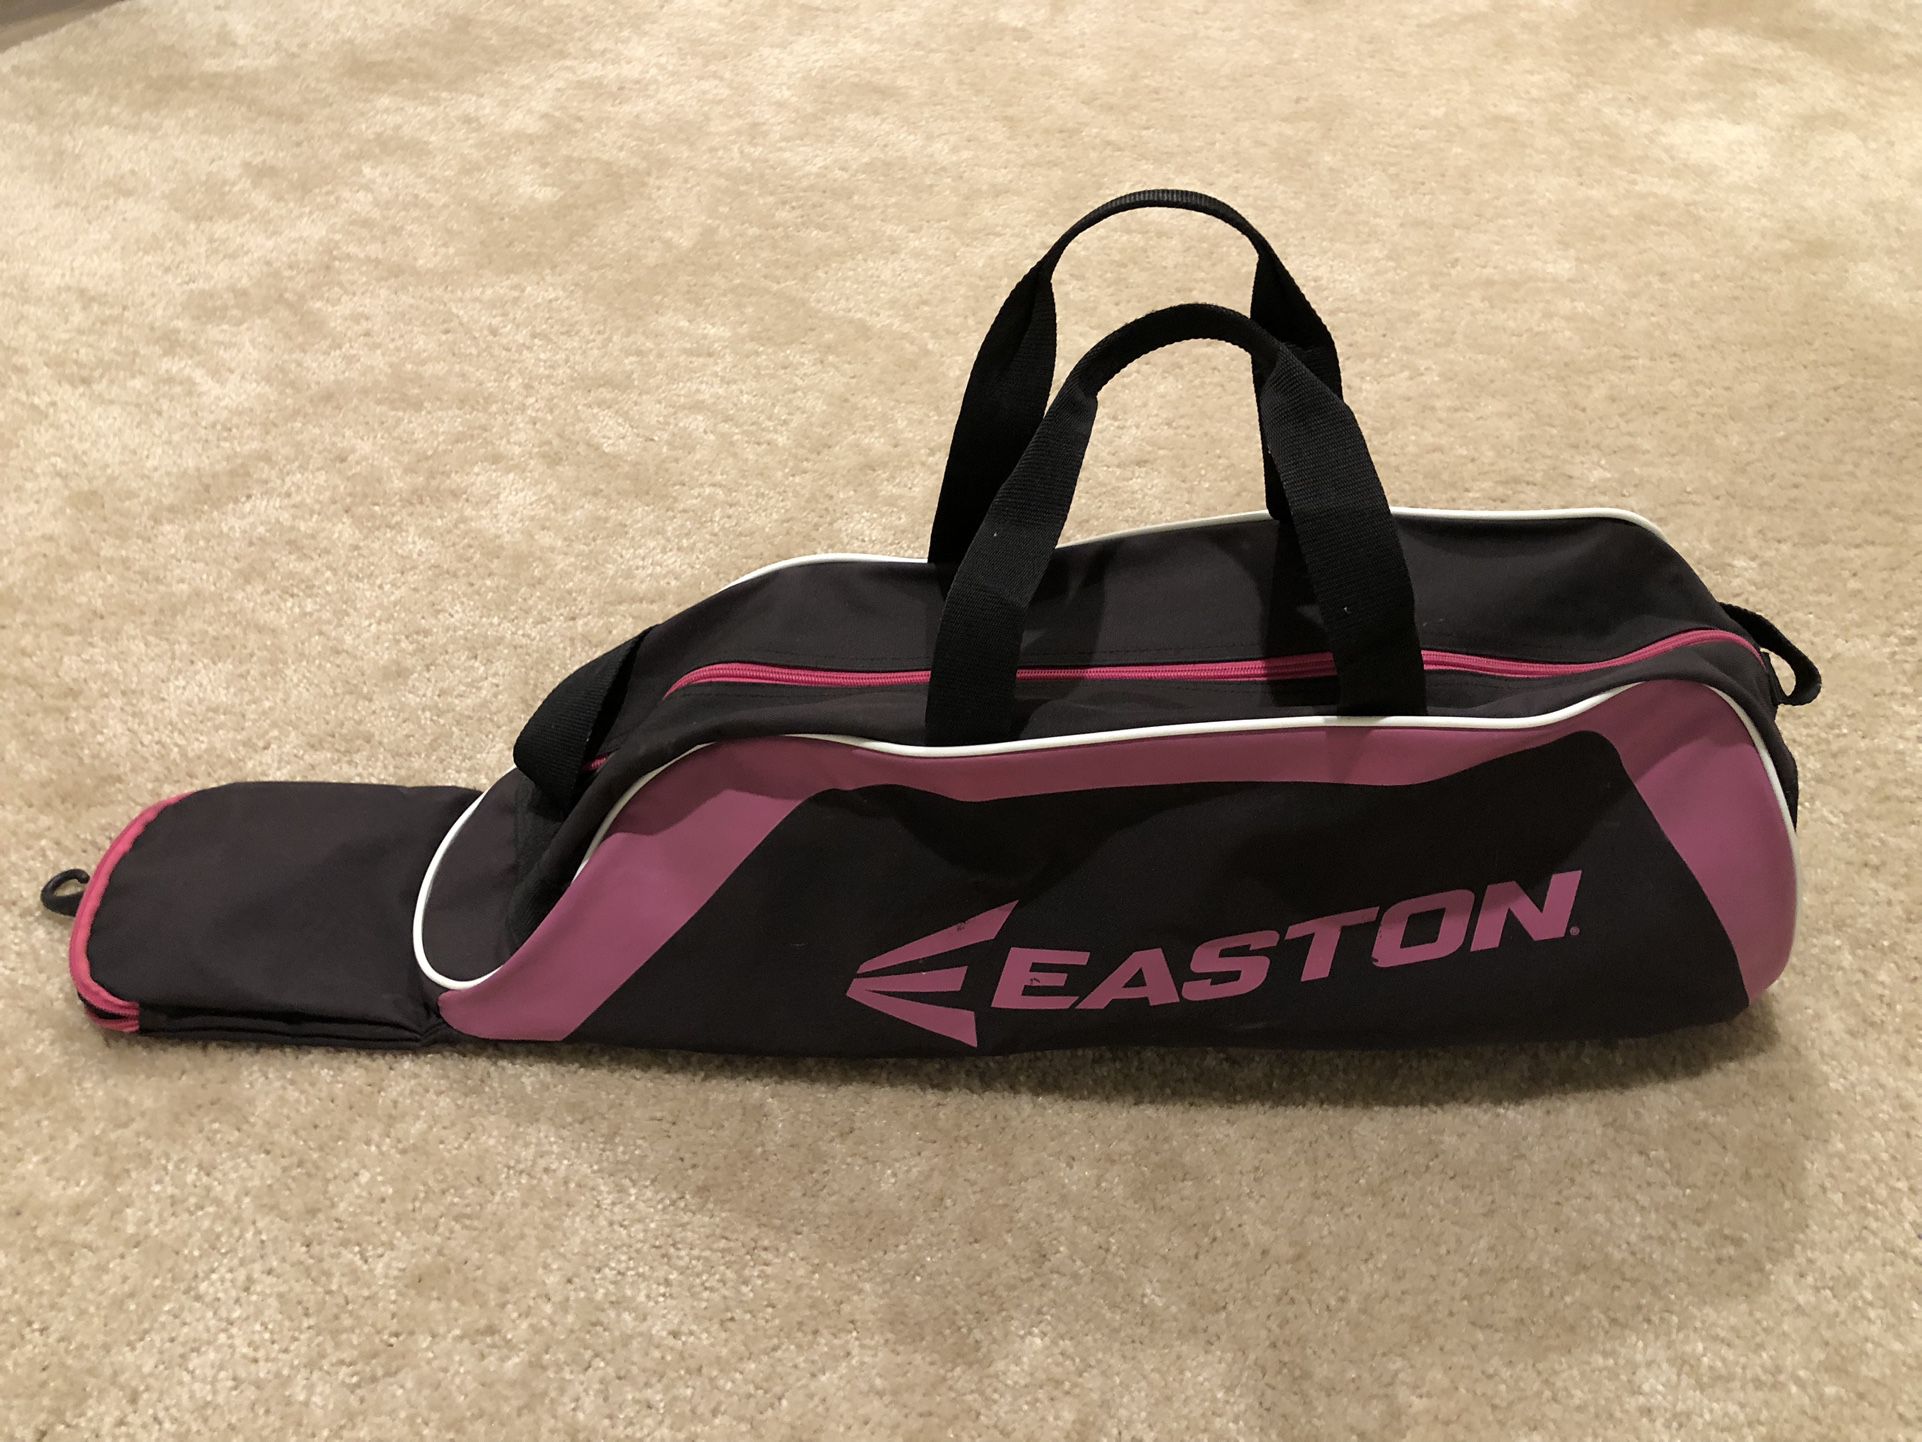 Easton Softball Bag / Baseball Bag (Black & Pink) - Holds All Yor Gear (Bats, Gloves, Balls, Shoes)